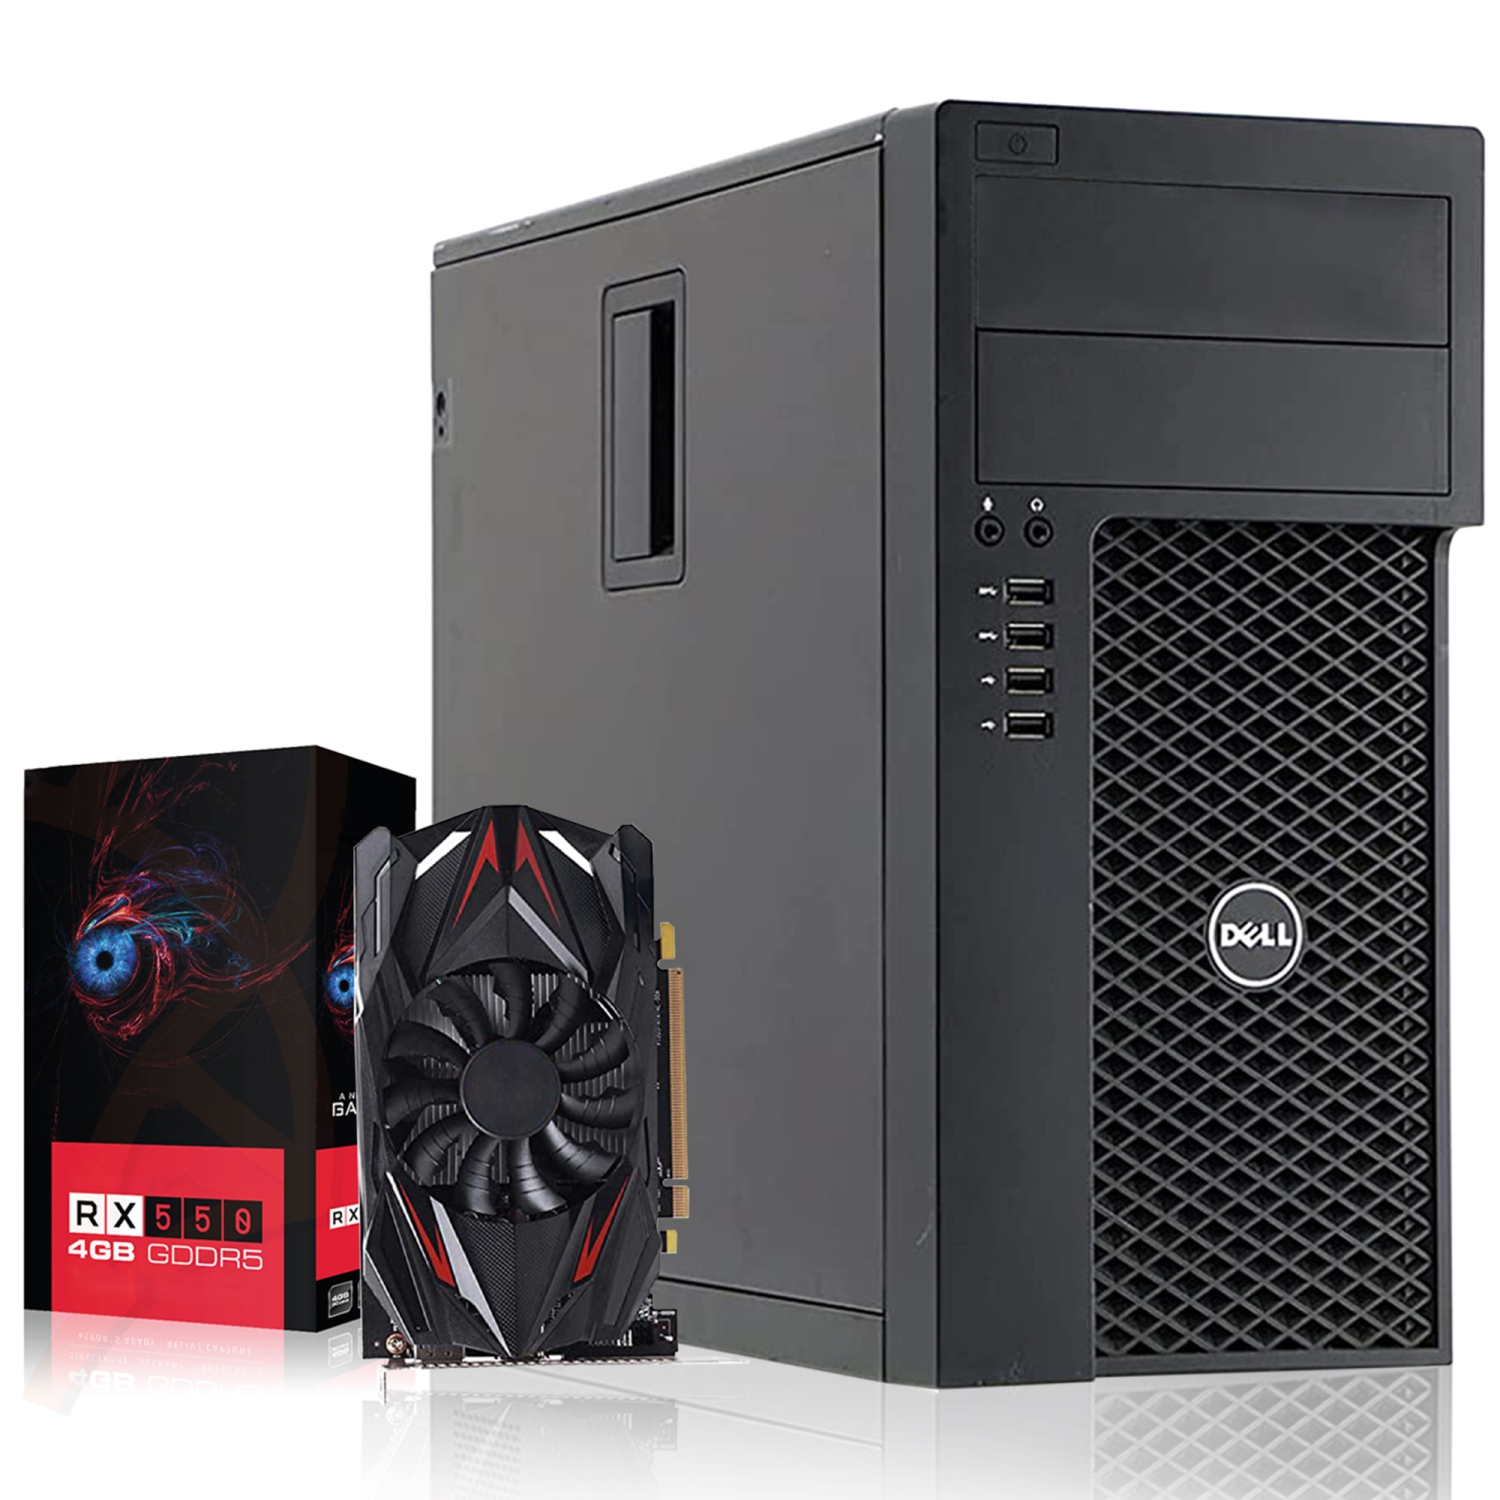 Refurbished (Good) - Dell Precision T1700 Tower Gaming Desktop Computer PC, (Core i7 - 4770 4th GEN/16GB RAM/2TB SSD/RX 550/WINDOWS 10 PRO) Intel Processor - Black